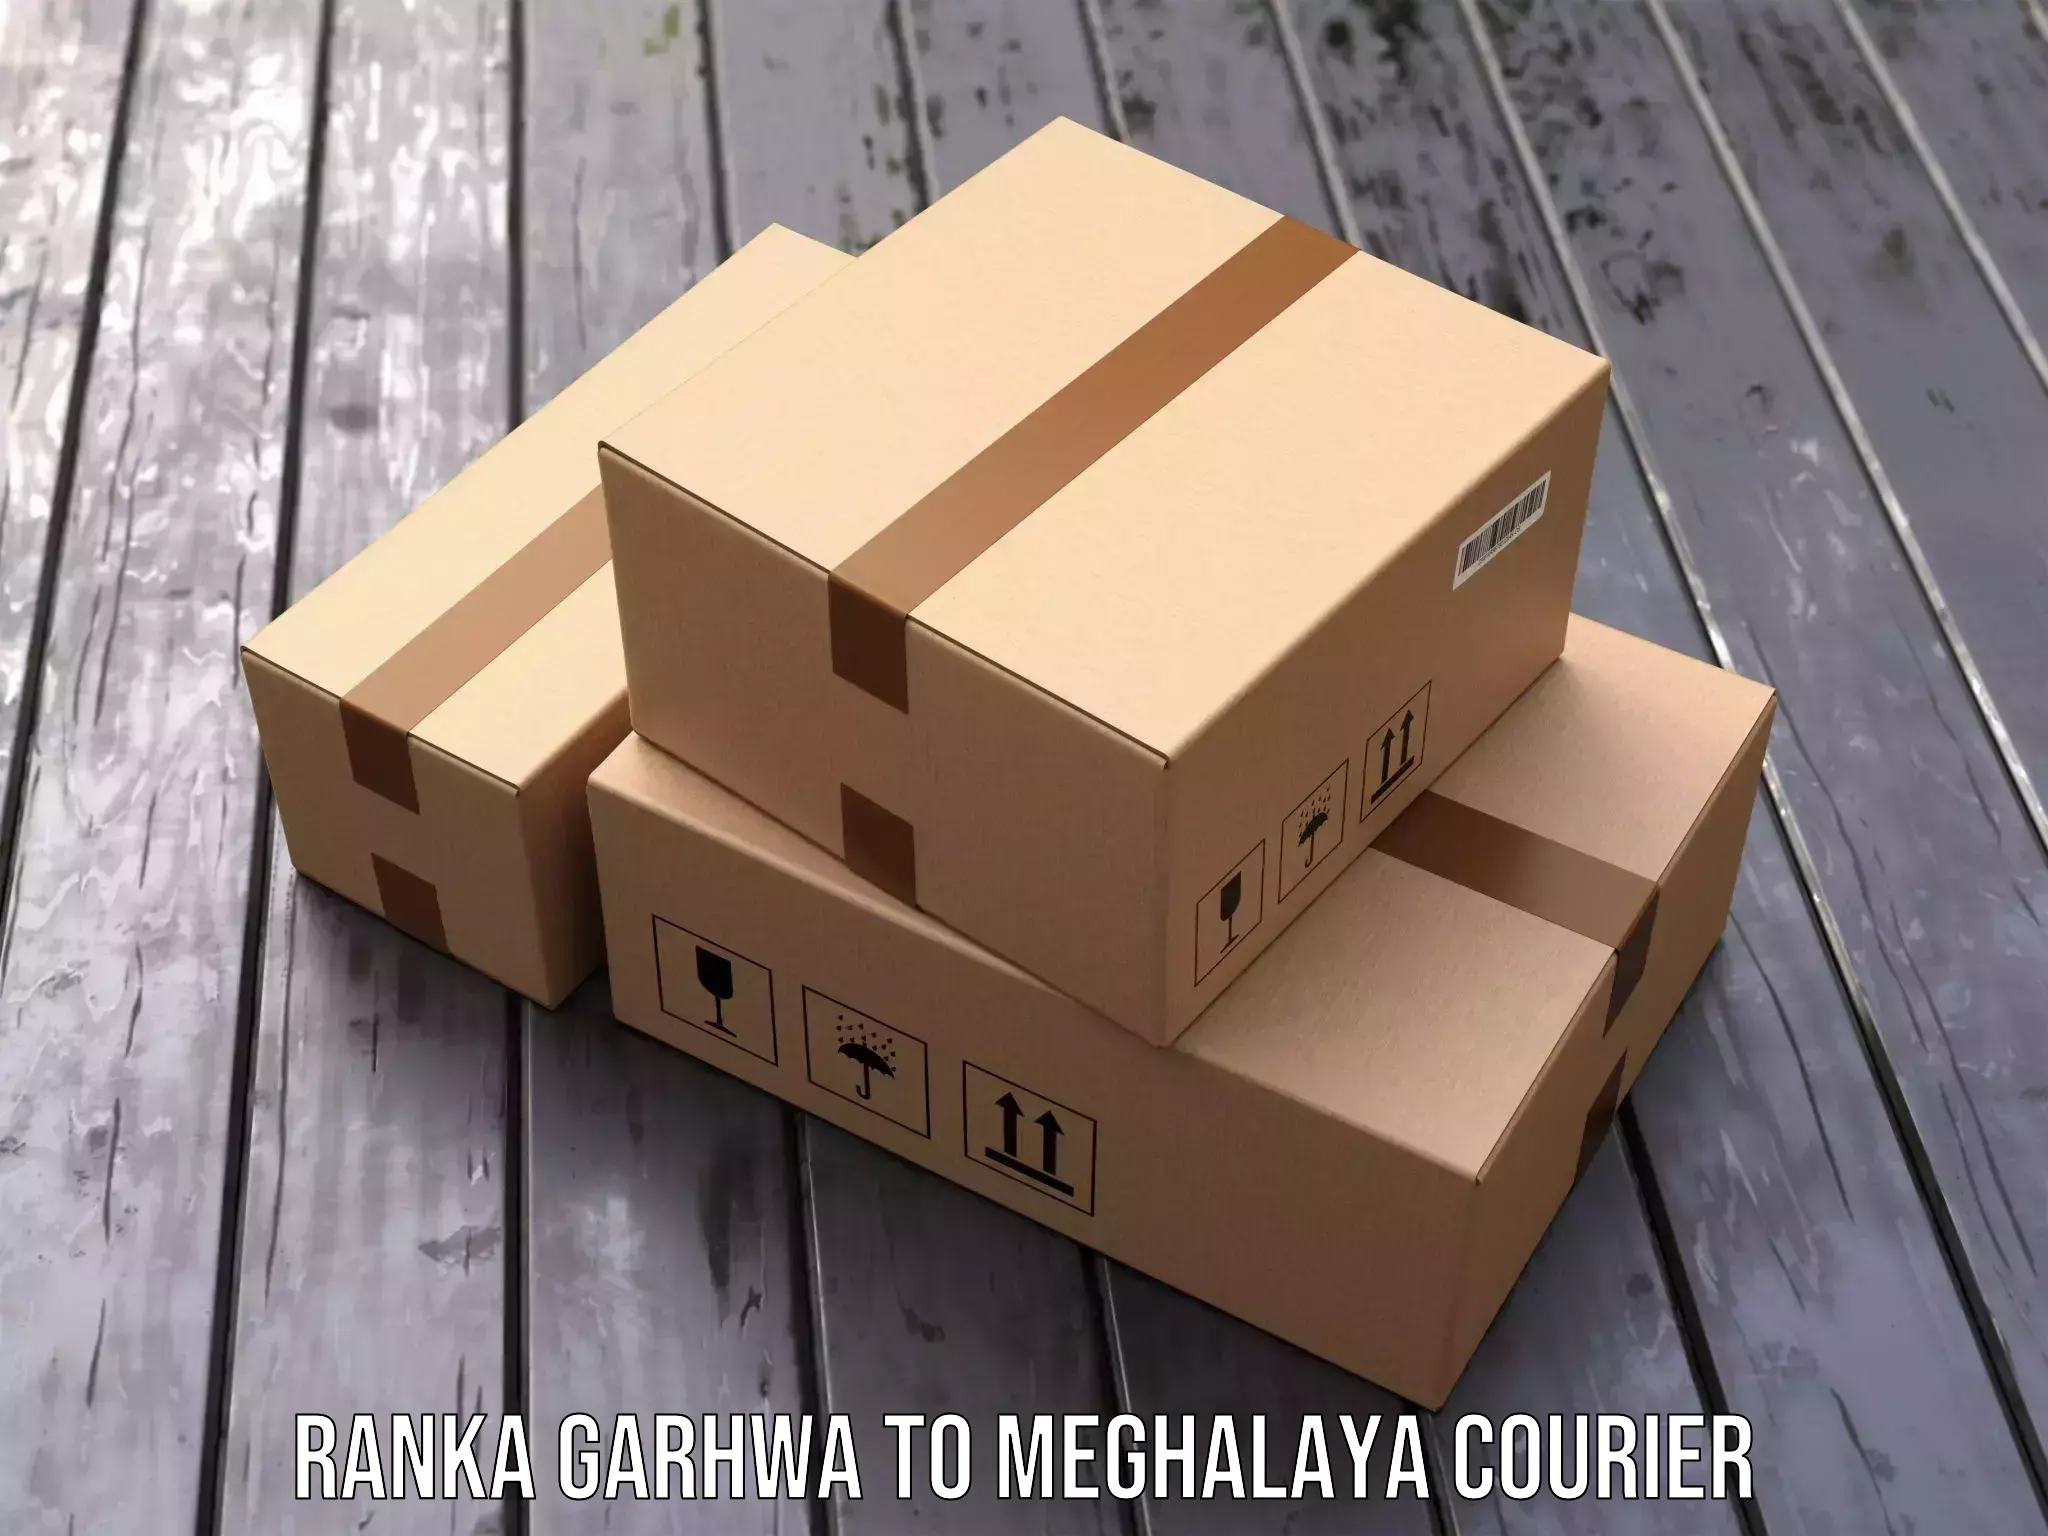 Personal courier services Ranka Garhwa to Shillong